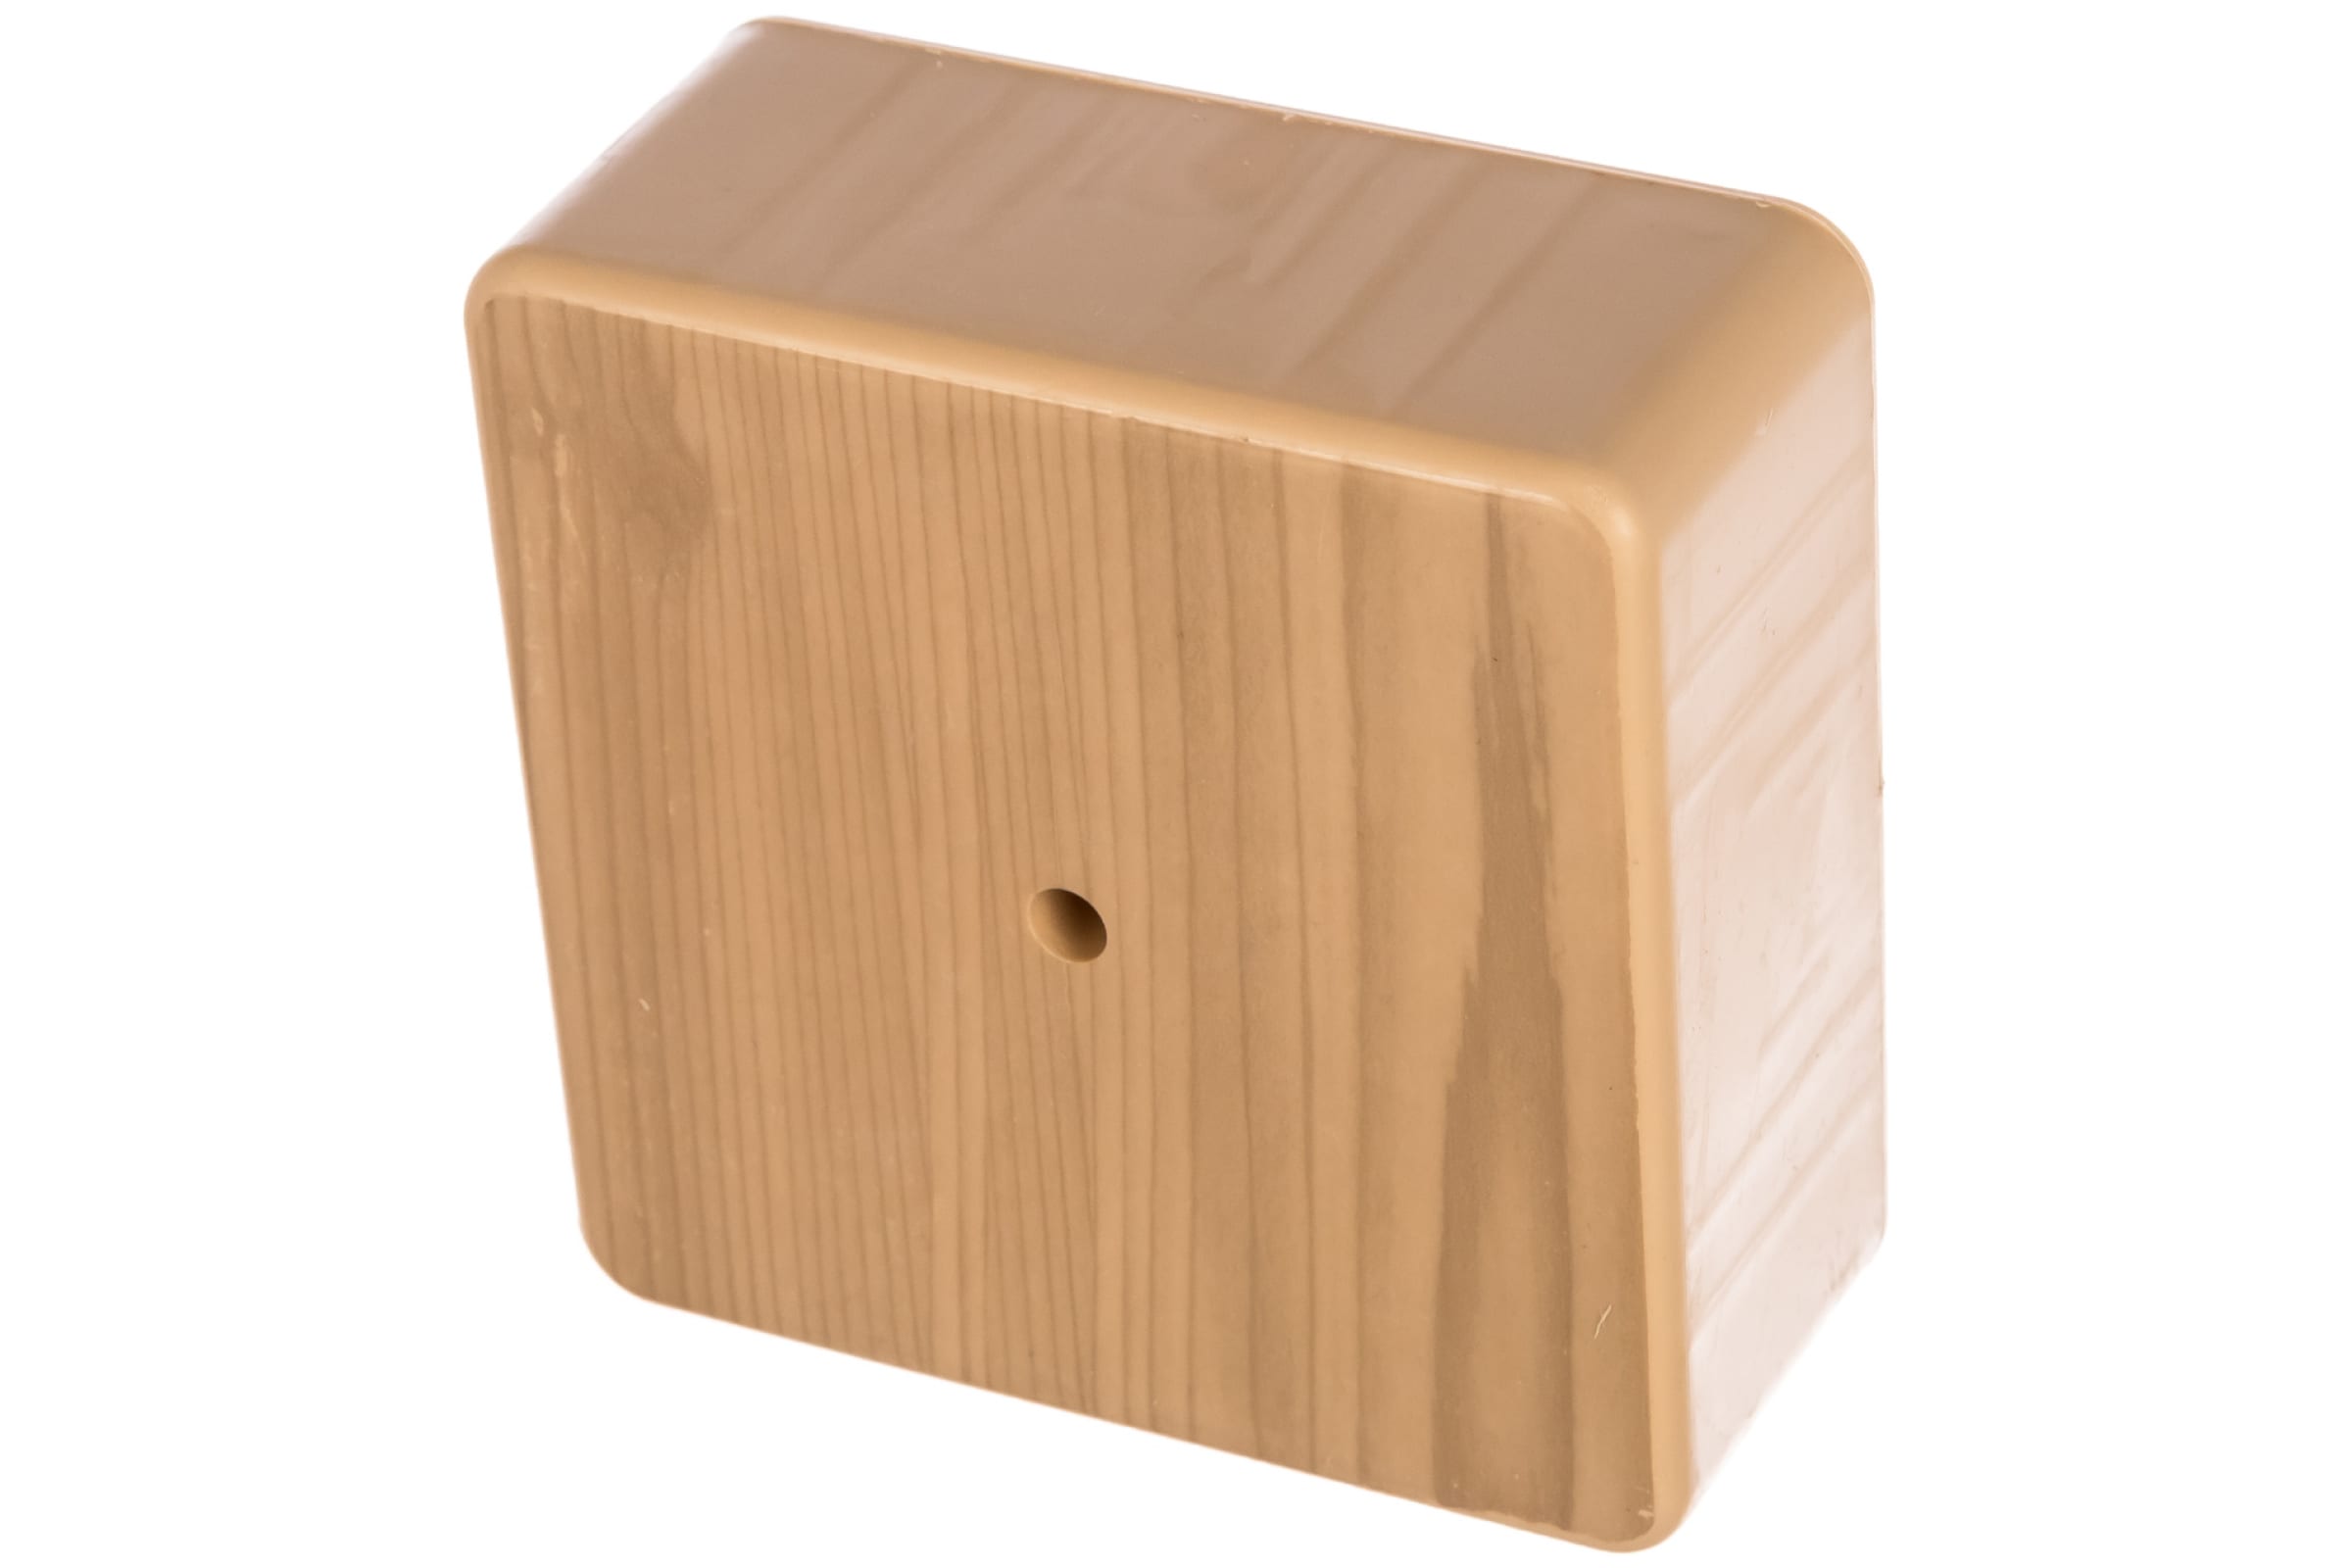  Коробка ОП 100*44мм квадр развет сосна SQ1401-0410